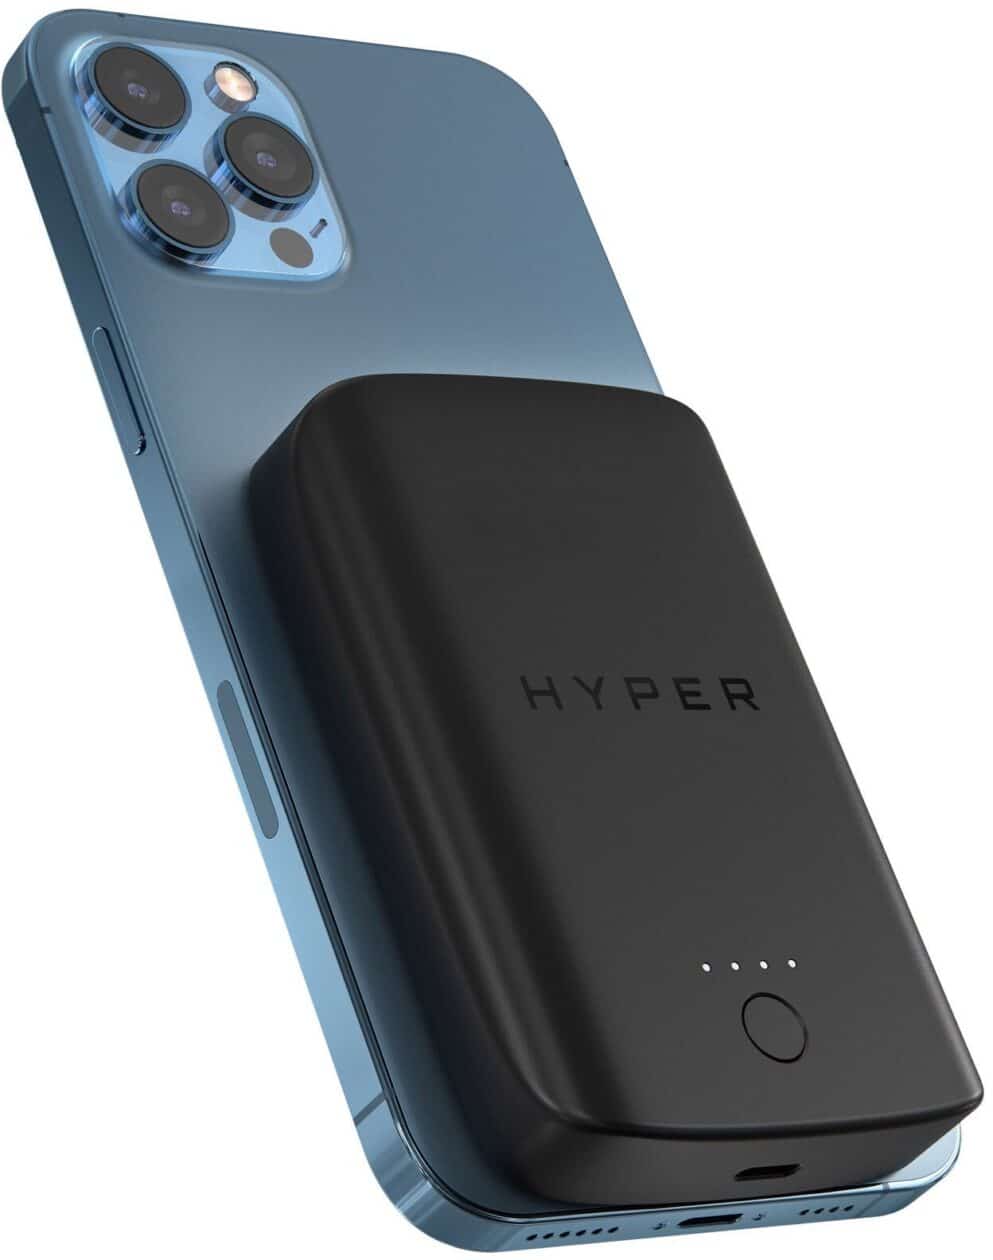 HYPER HyperJuice Magnetic Wireless Battery Pack